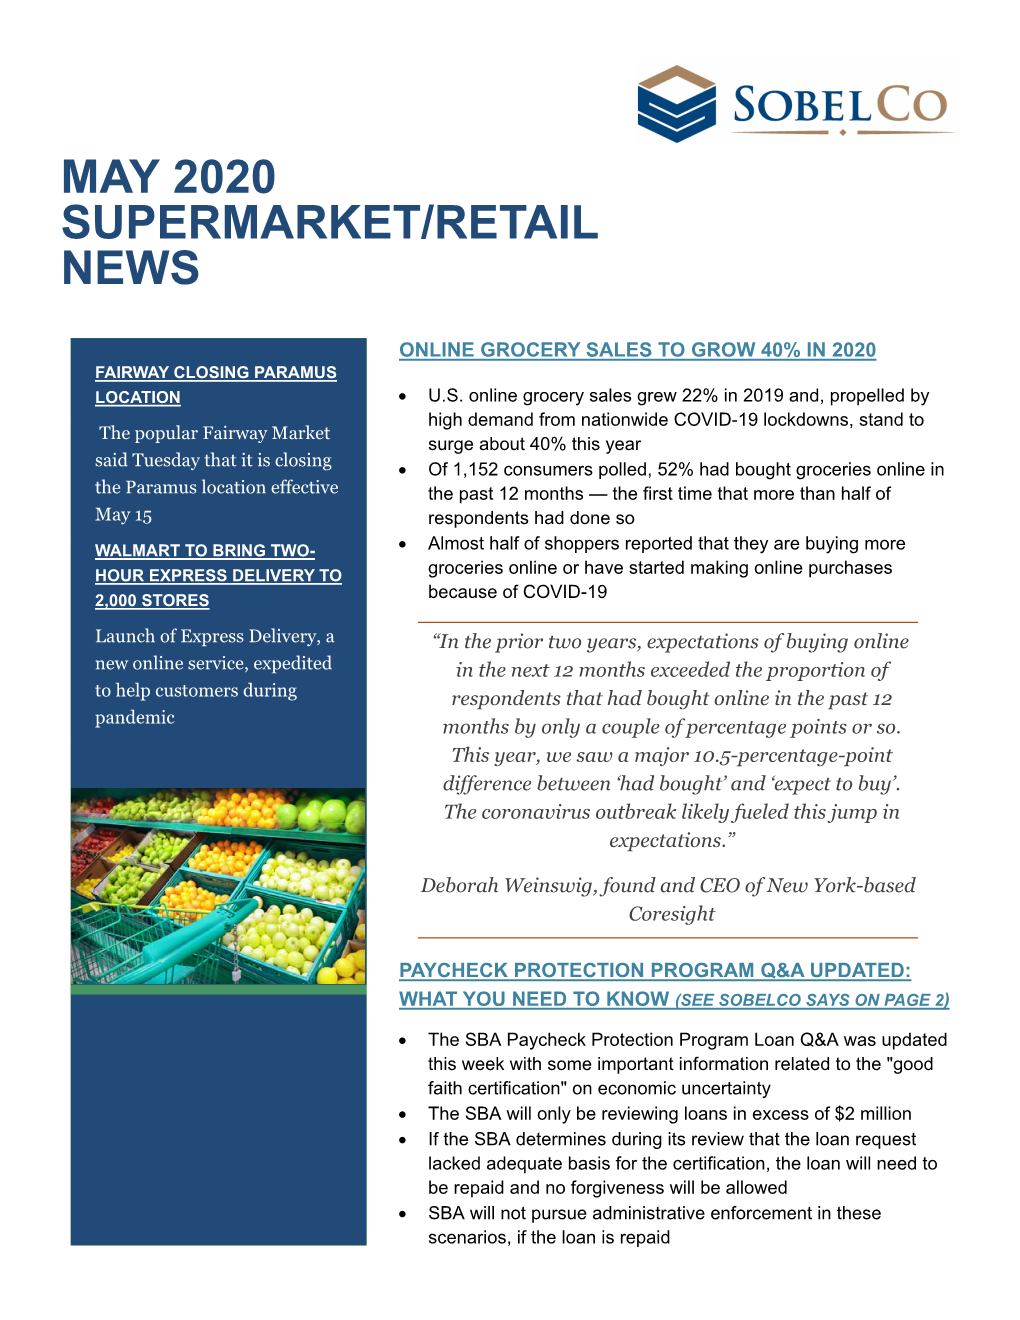 May 2020 Supermarket/Retail News